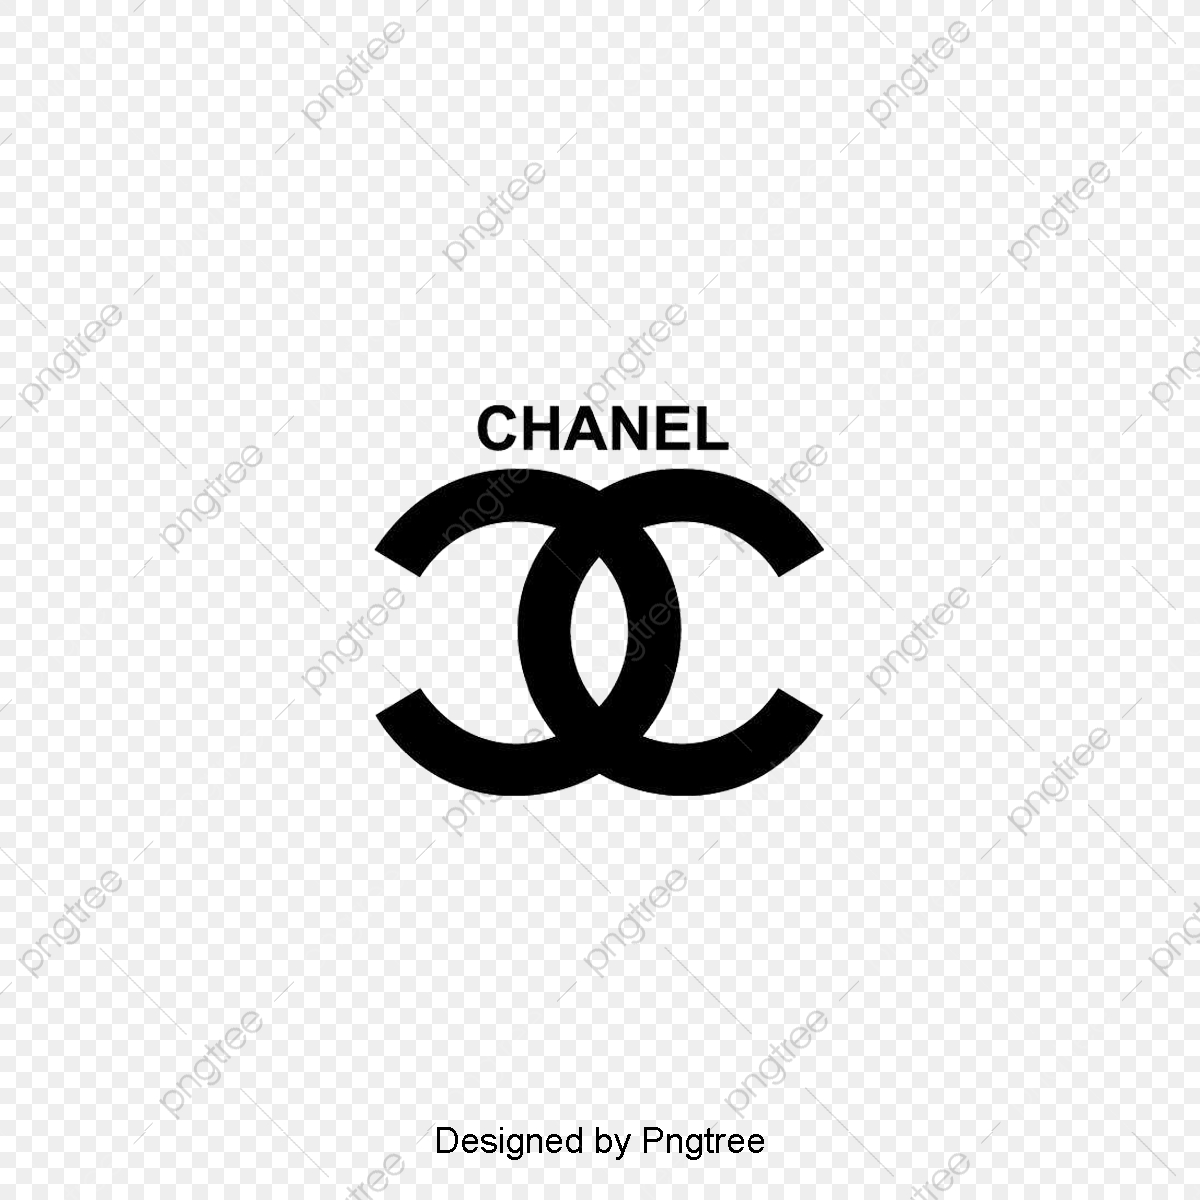 Chanel Logo Design, Chanel, Luxury, France Png Transparent Clipart Pluspng.com  - Chanel, Transparent background PNG HD thumbnail